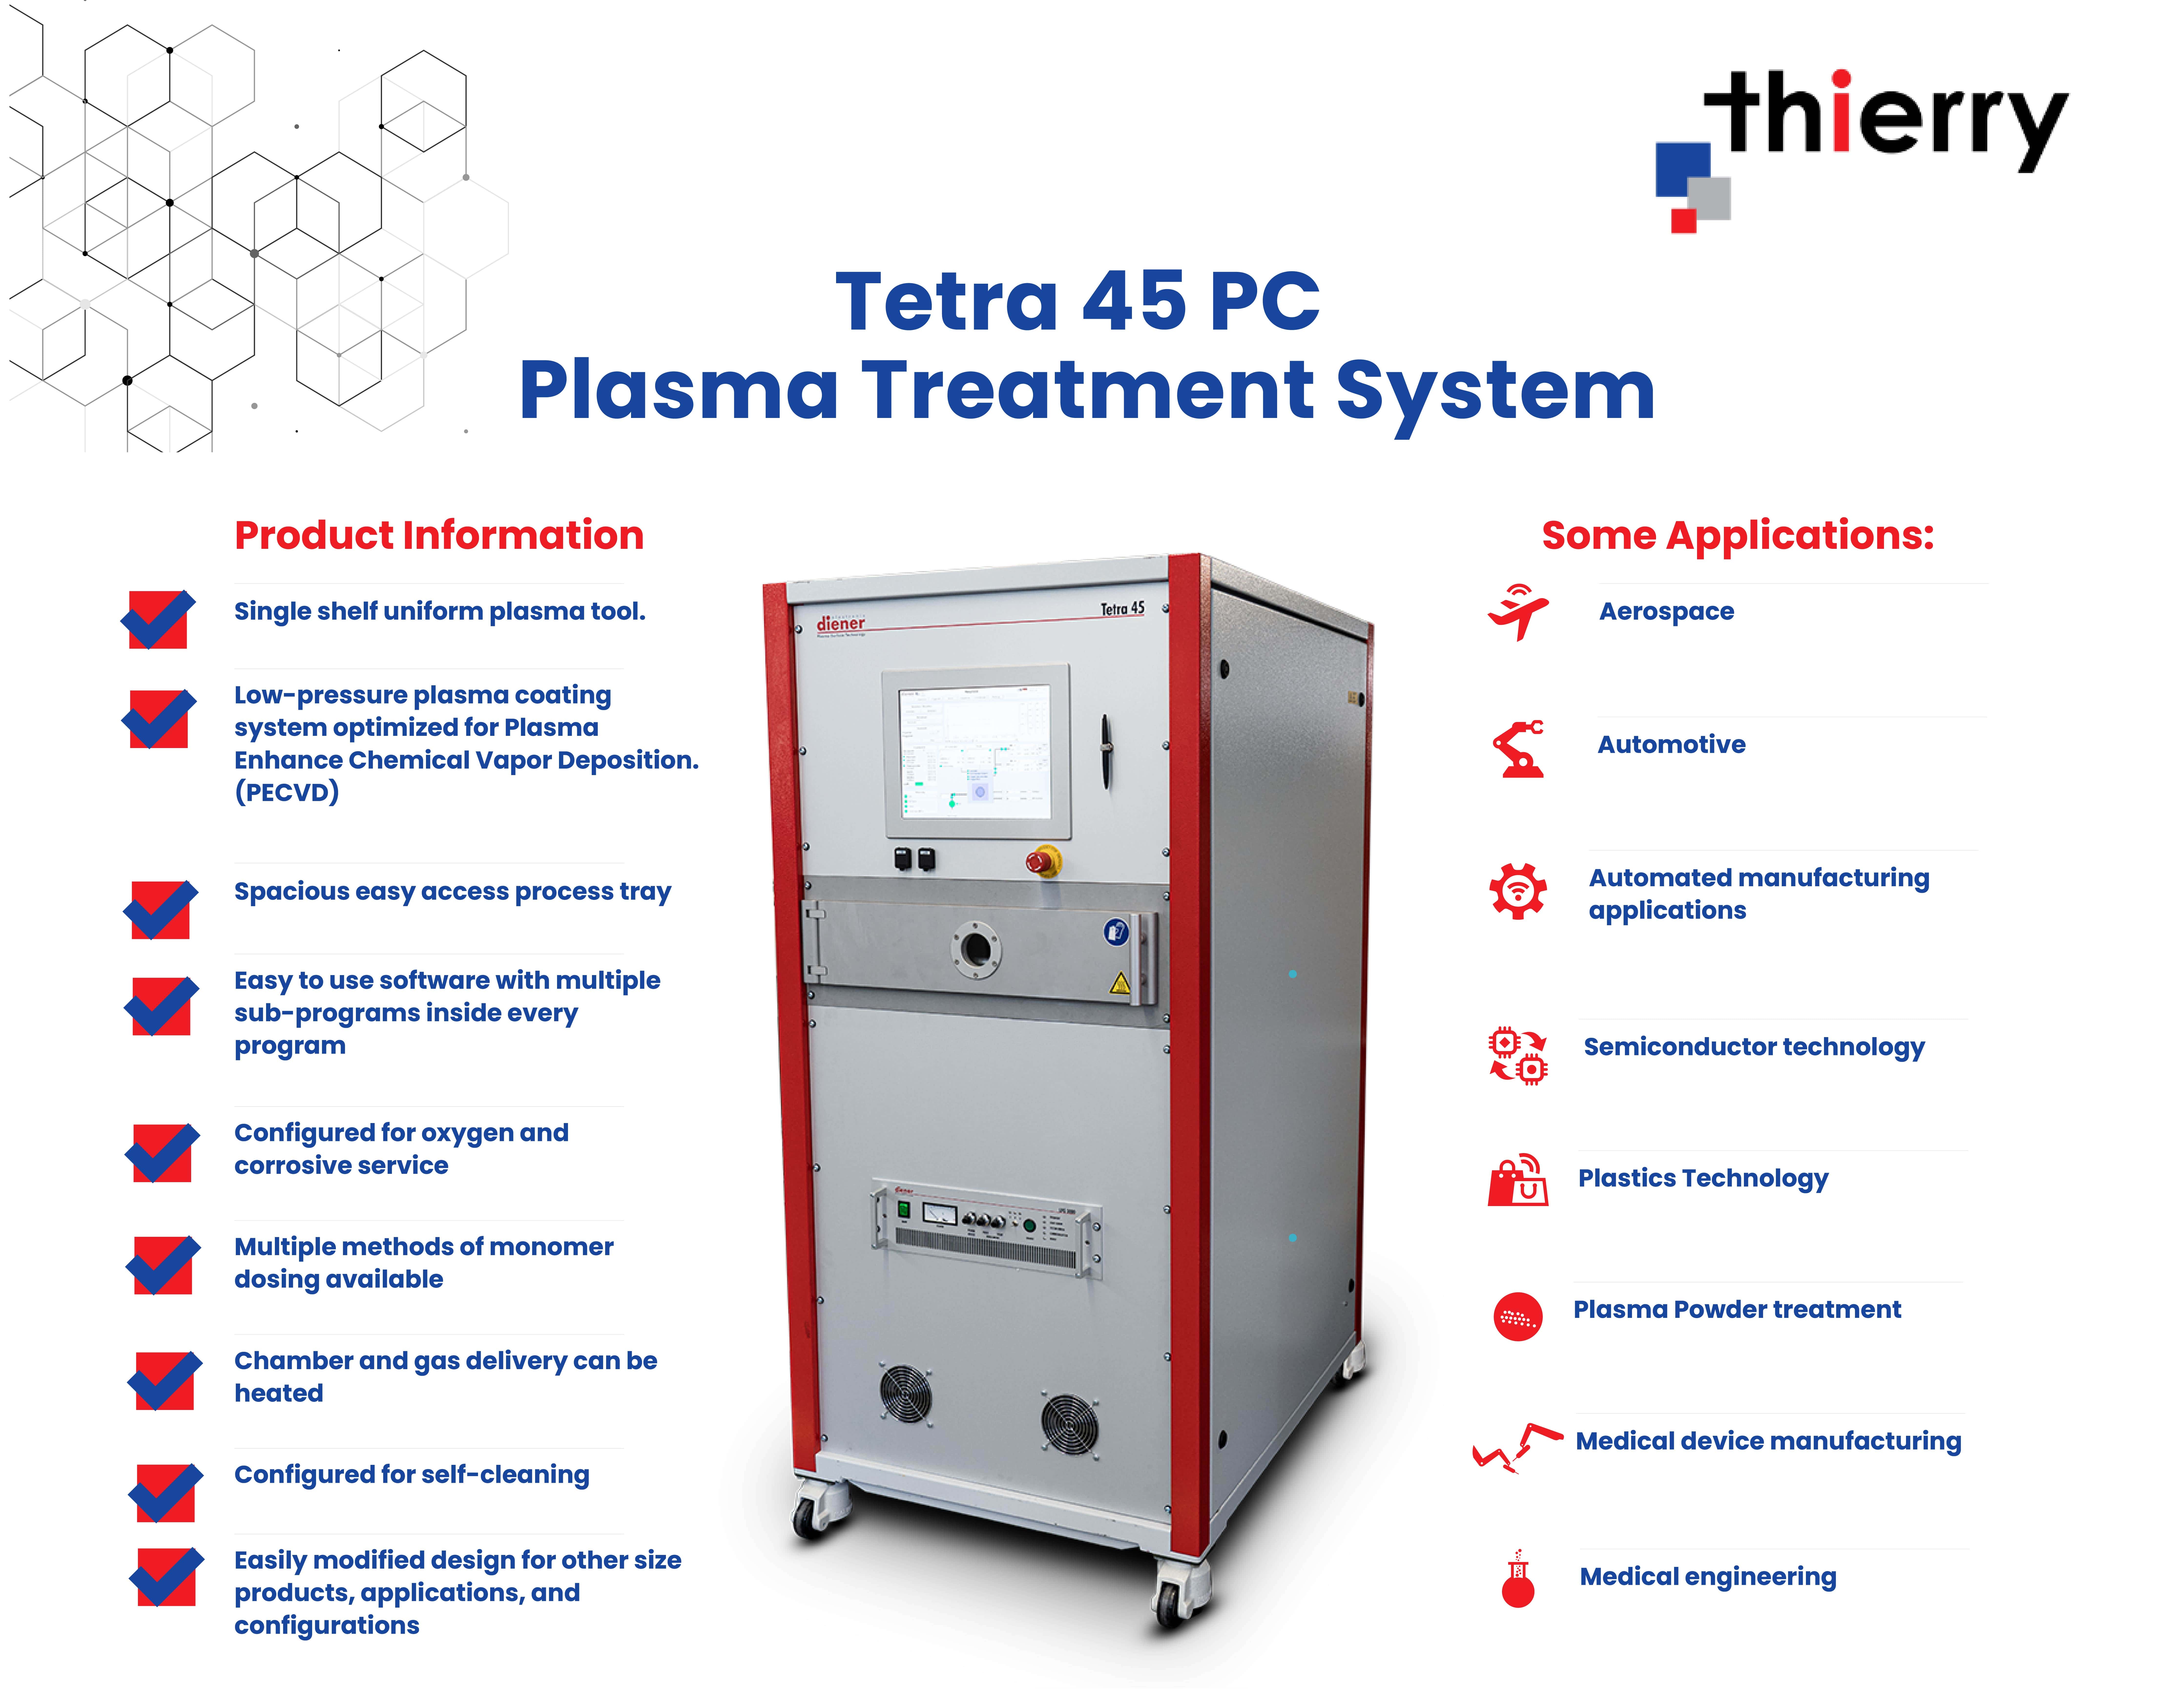 Thierry Corp Tetra 45 PC Plasma Treatment System